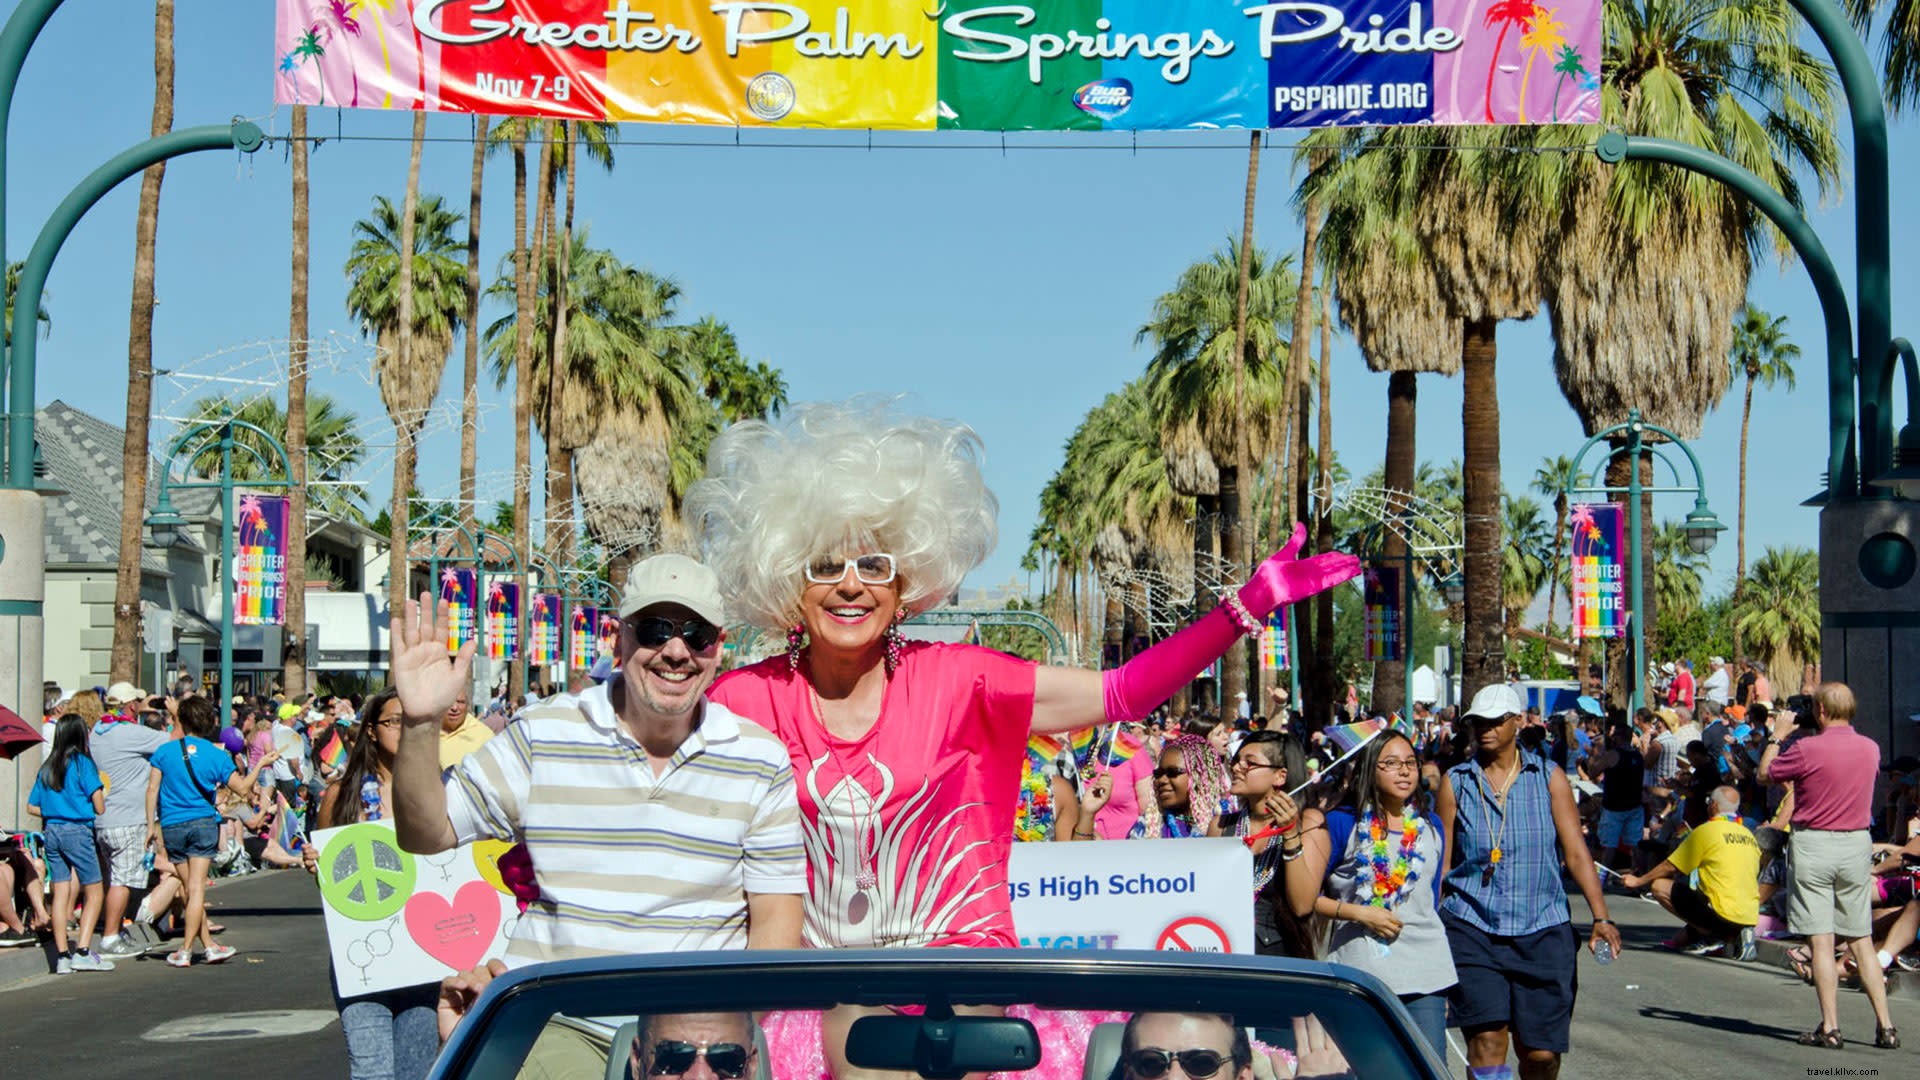 Greater Palm Springs Pride 2017 Celebra la Diversidad y “Viva la Vida” 